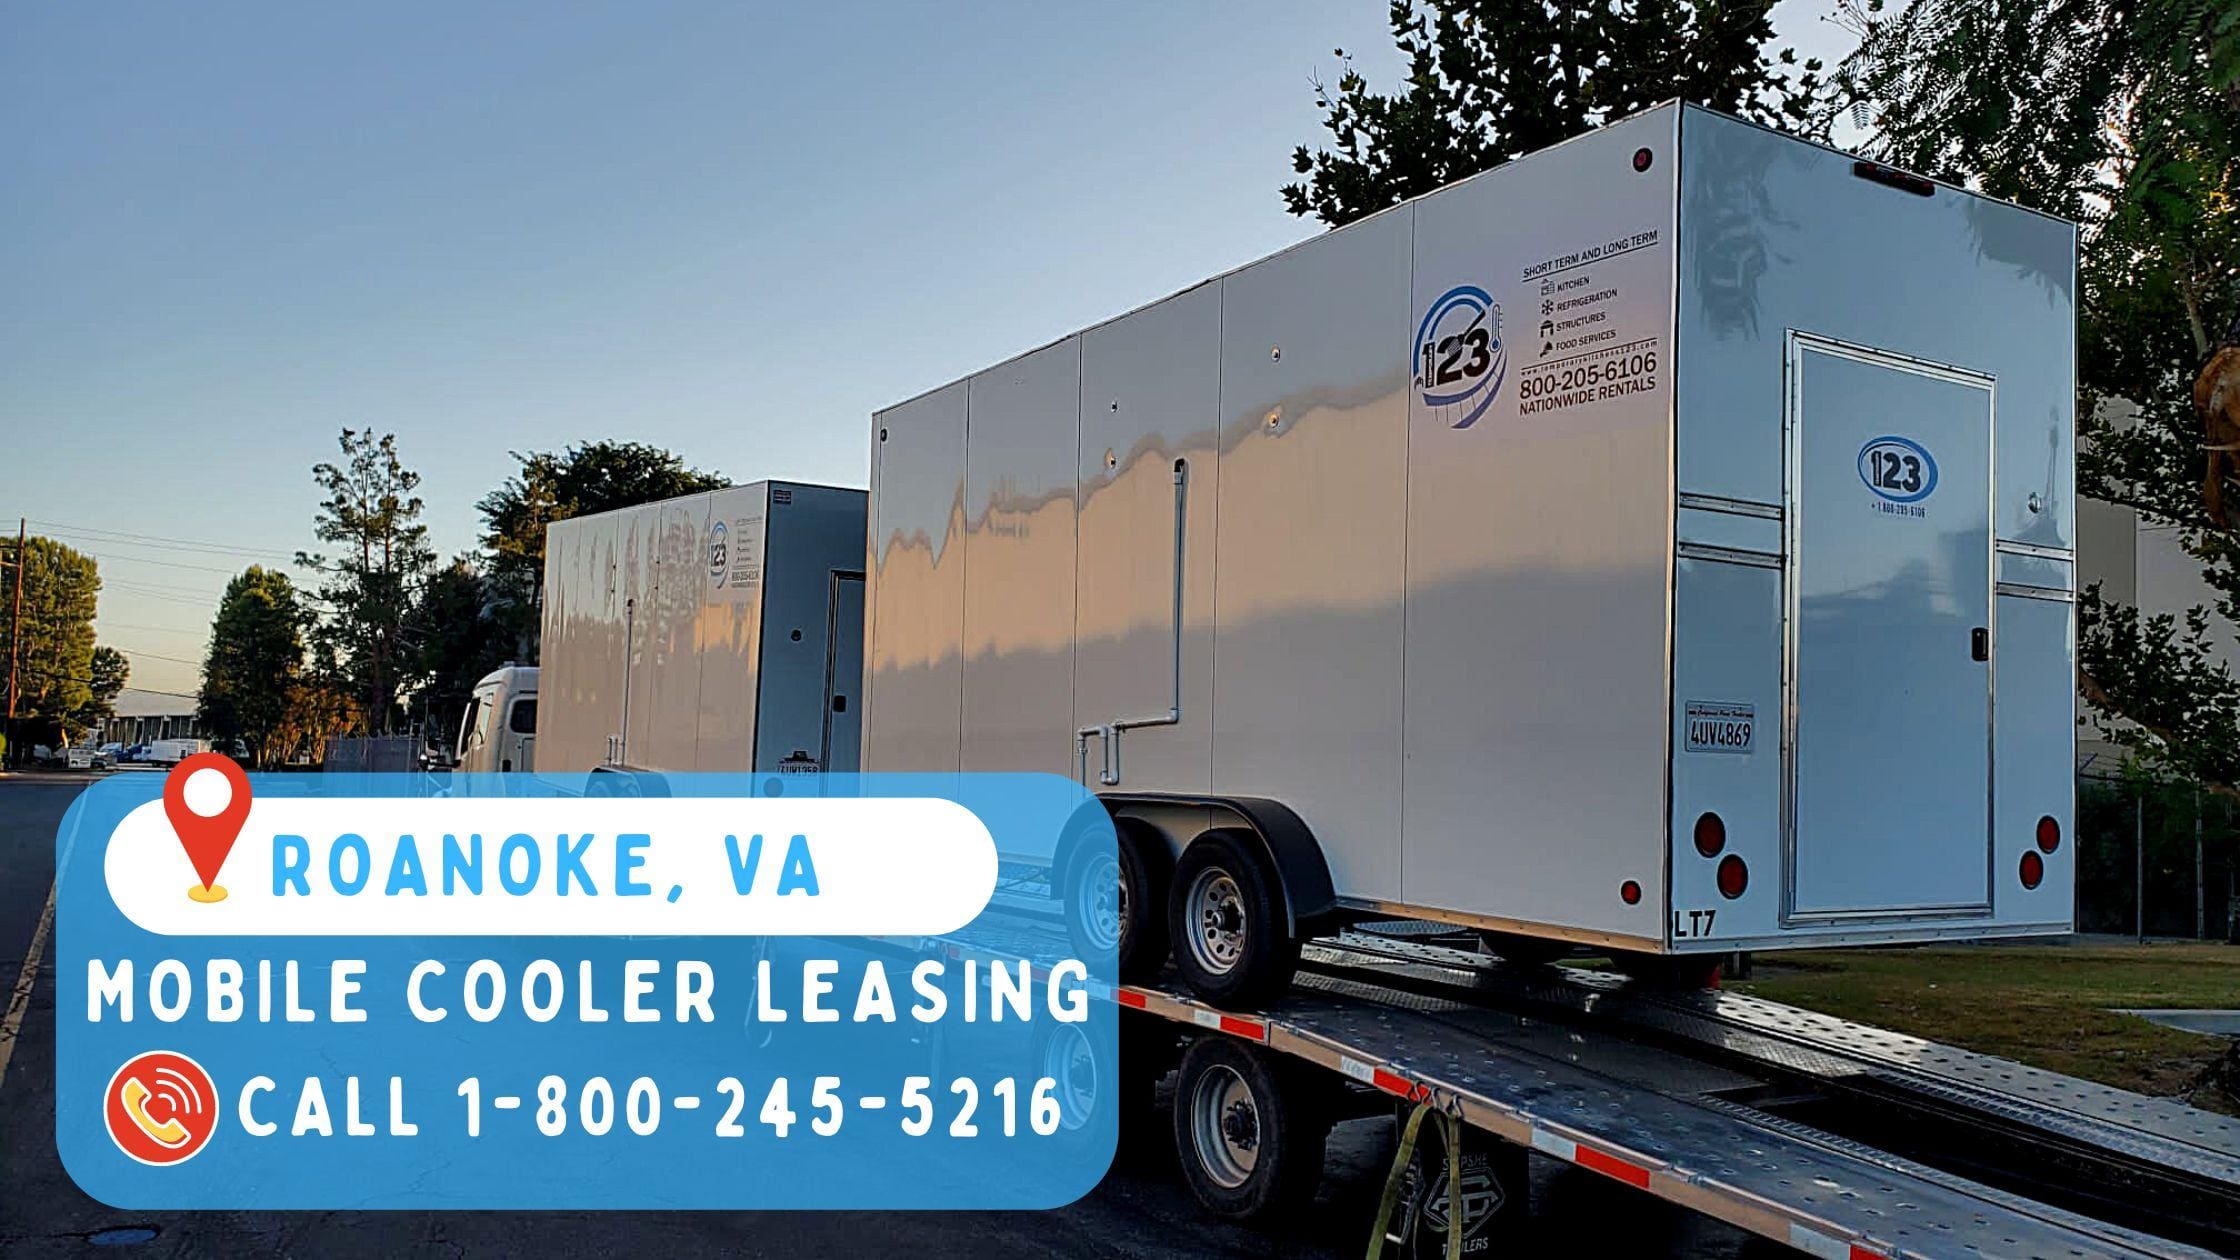 Mobile Cooler Leasing in Roanoke